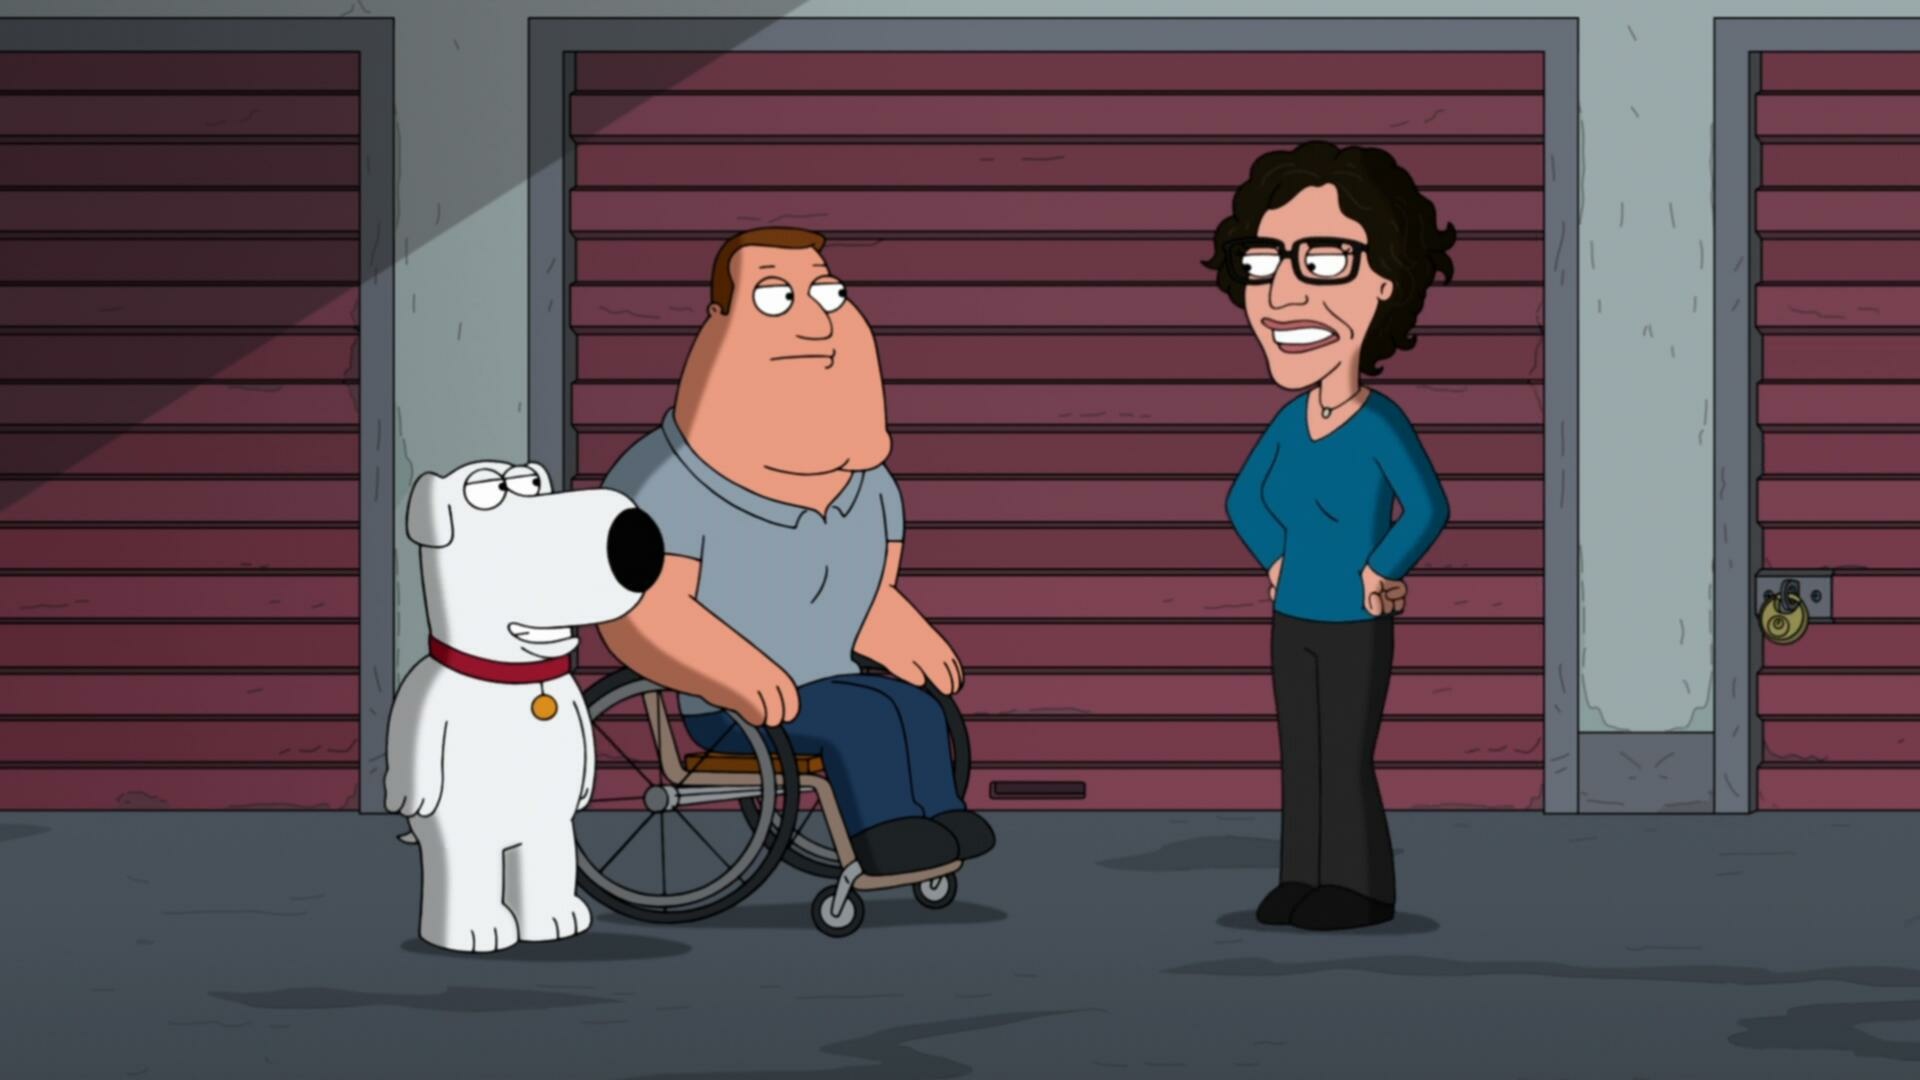 Family Guy S22E02 REPACK 1080p WEB h264 BAE TGx